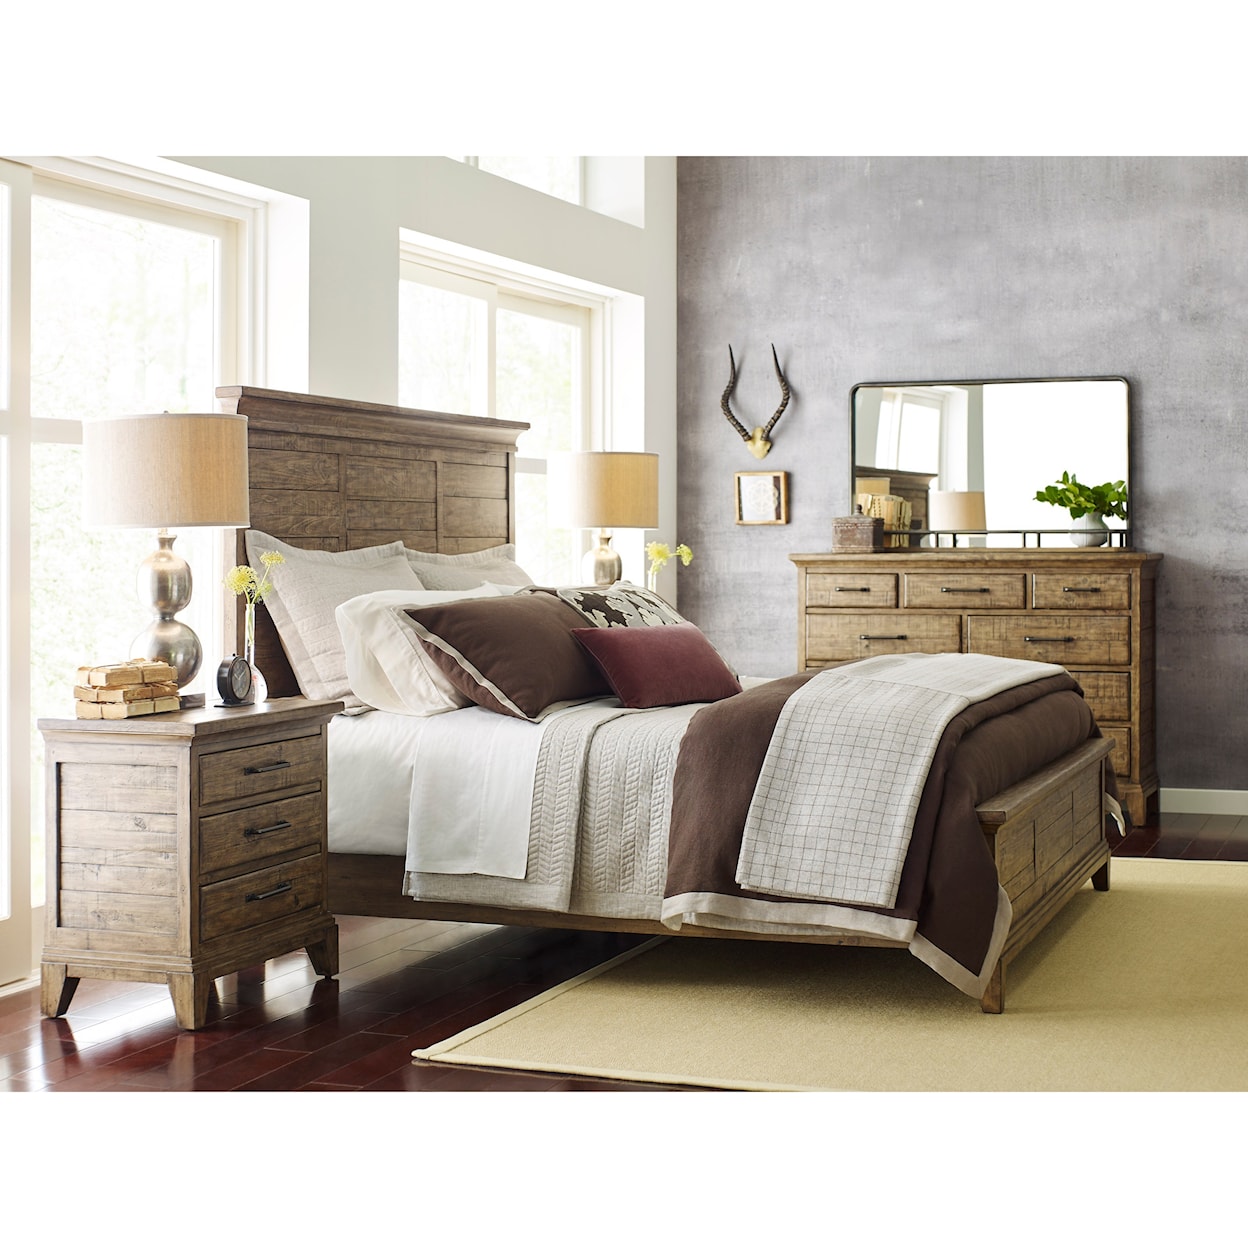 Kincaid Furniture Plank Road King Bedroom Group